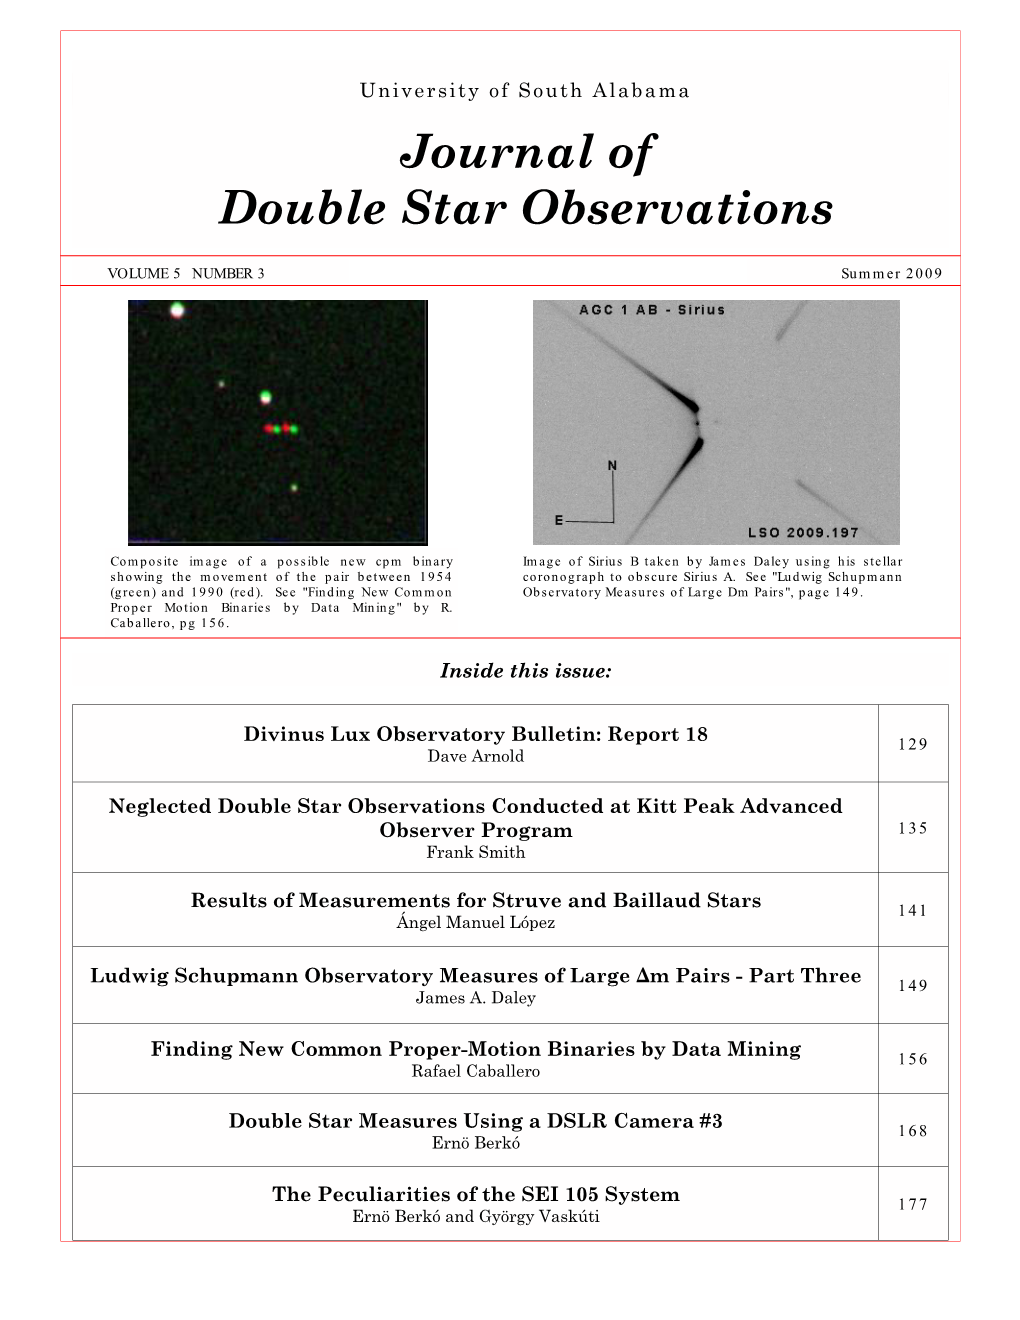 Divinus Lux Observatory Bulletin: Report 18 129 Dave Arnold